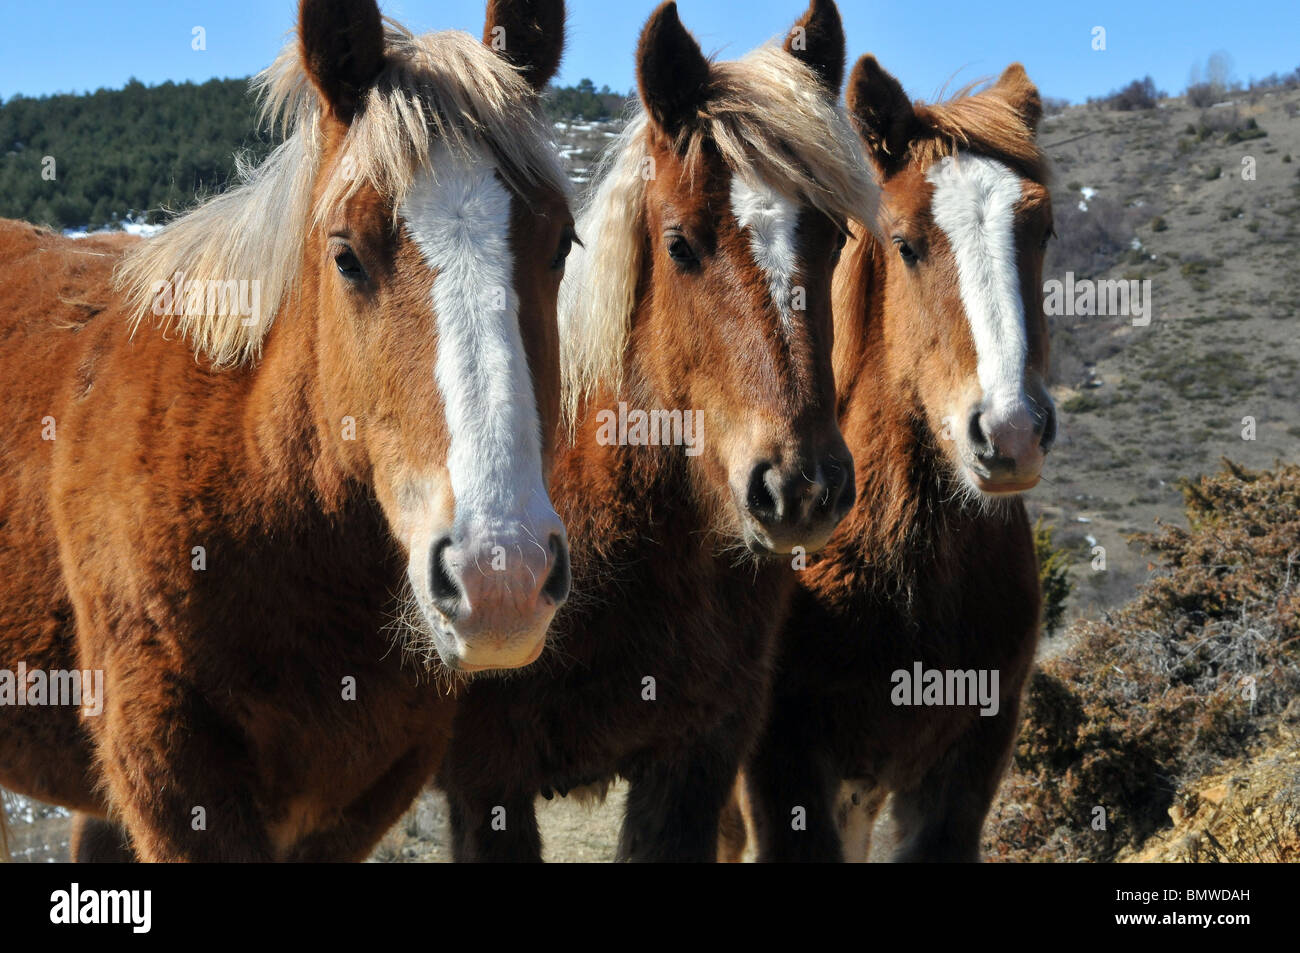 Three Horses, looking at camera, with funny blond fringe hair, Cerdanya, Eastern Pyrenees, Girona, Catalonia, Spain Stock Photo